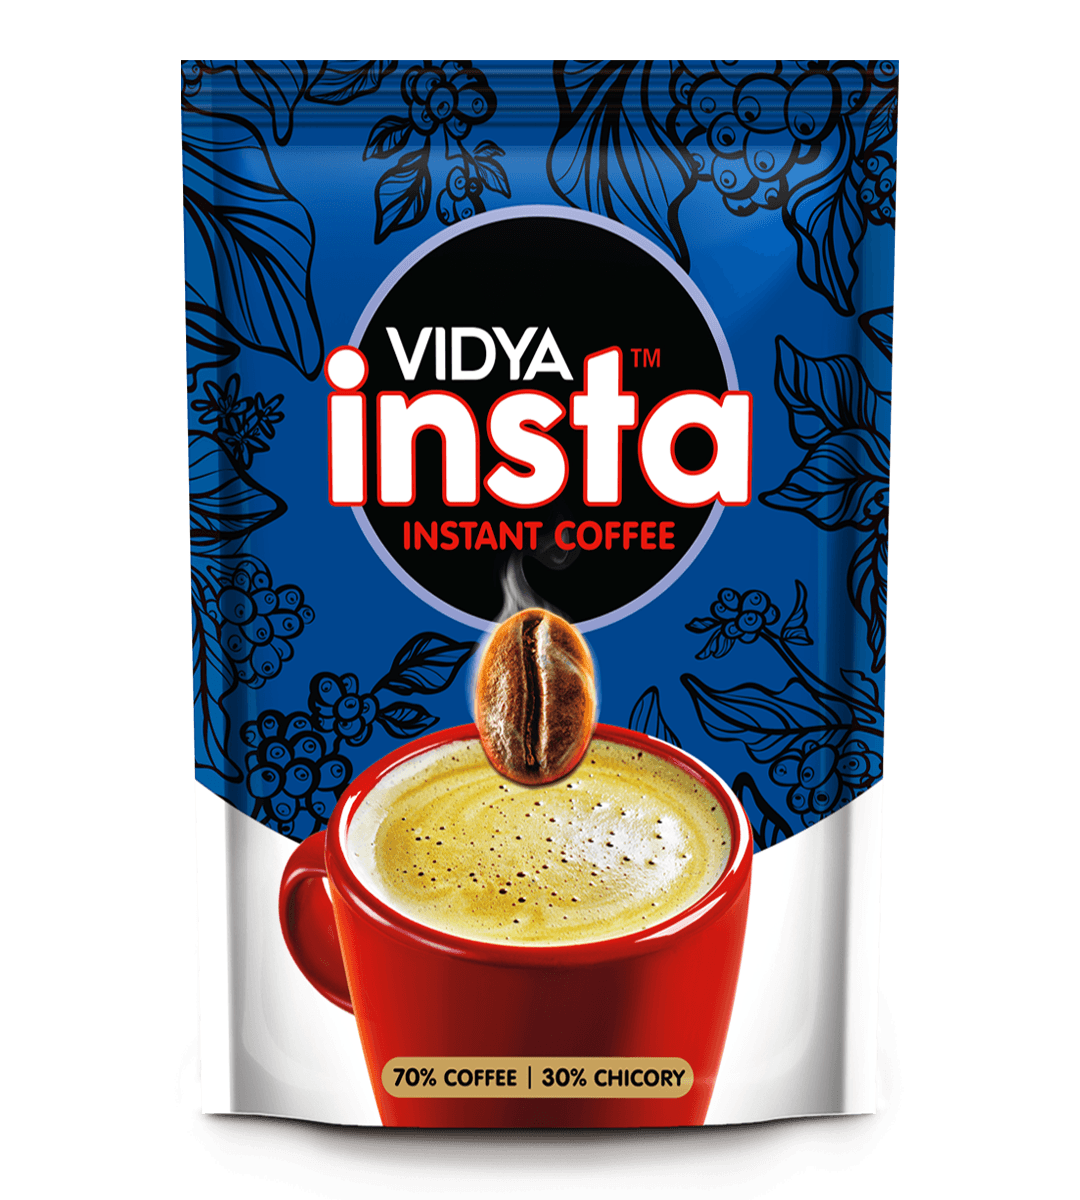 Vidya Insta 70/30, Vidya Instant Coffee